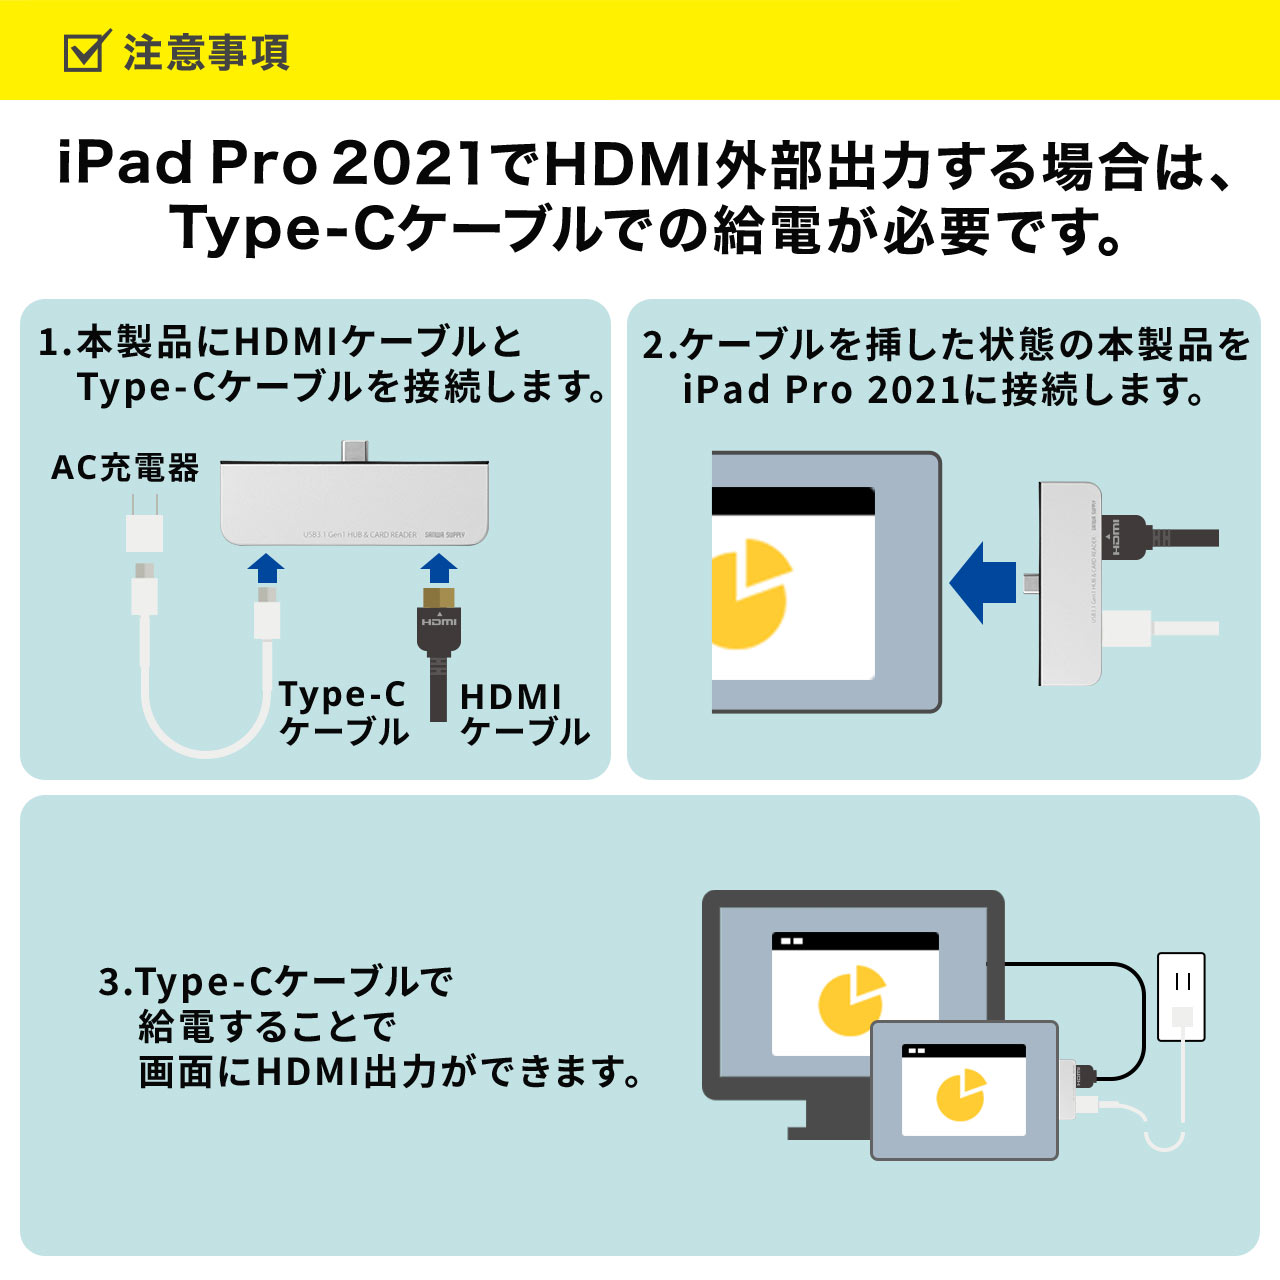 USB Type-C nu iPad Pro /iPad Air4 PD[d/60WΉ 5in1 HDMI/4KΉ CzWbN SD/microSDJ[h 400-HUBIP086